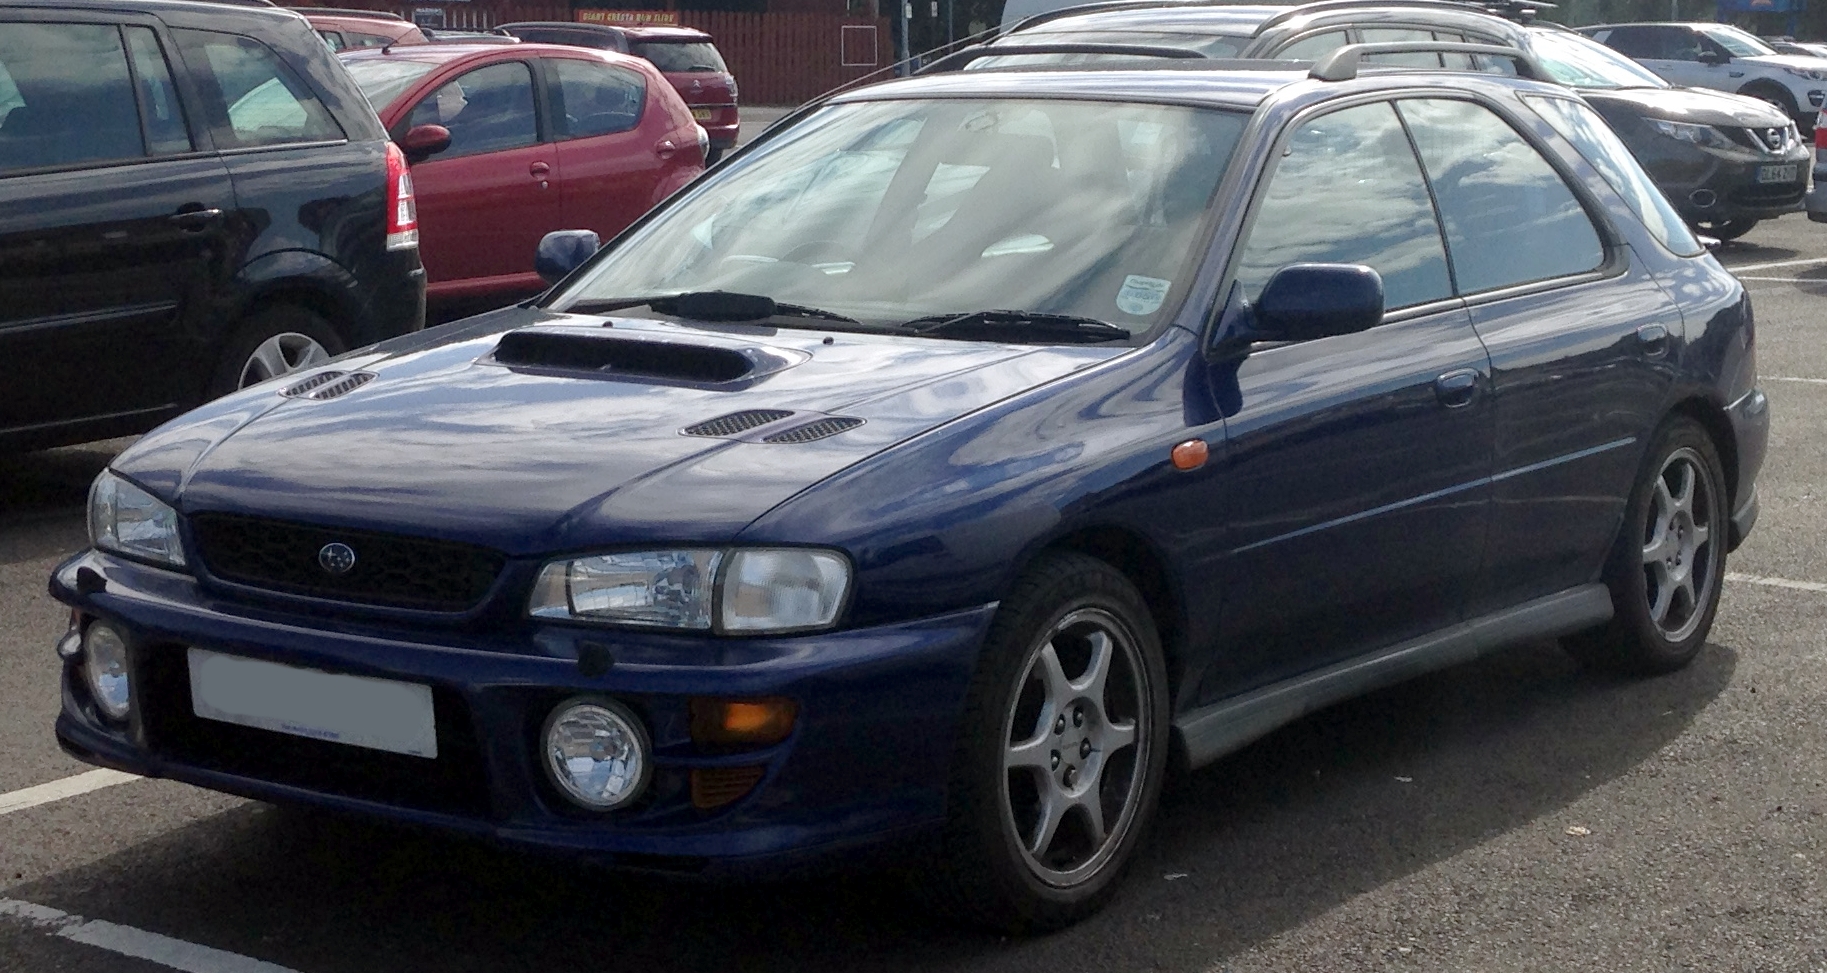 File:2000 Subaru Impreza Turbo 2000 AWD 2.0 Front.jpg - Wikimedia Commons